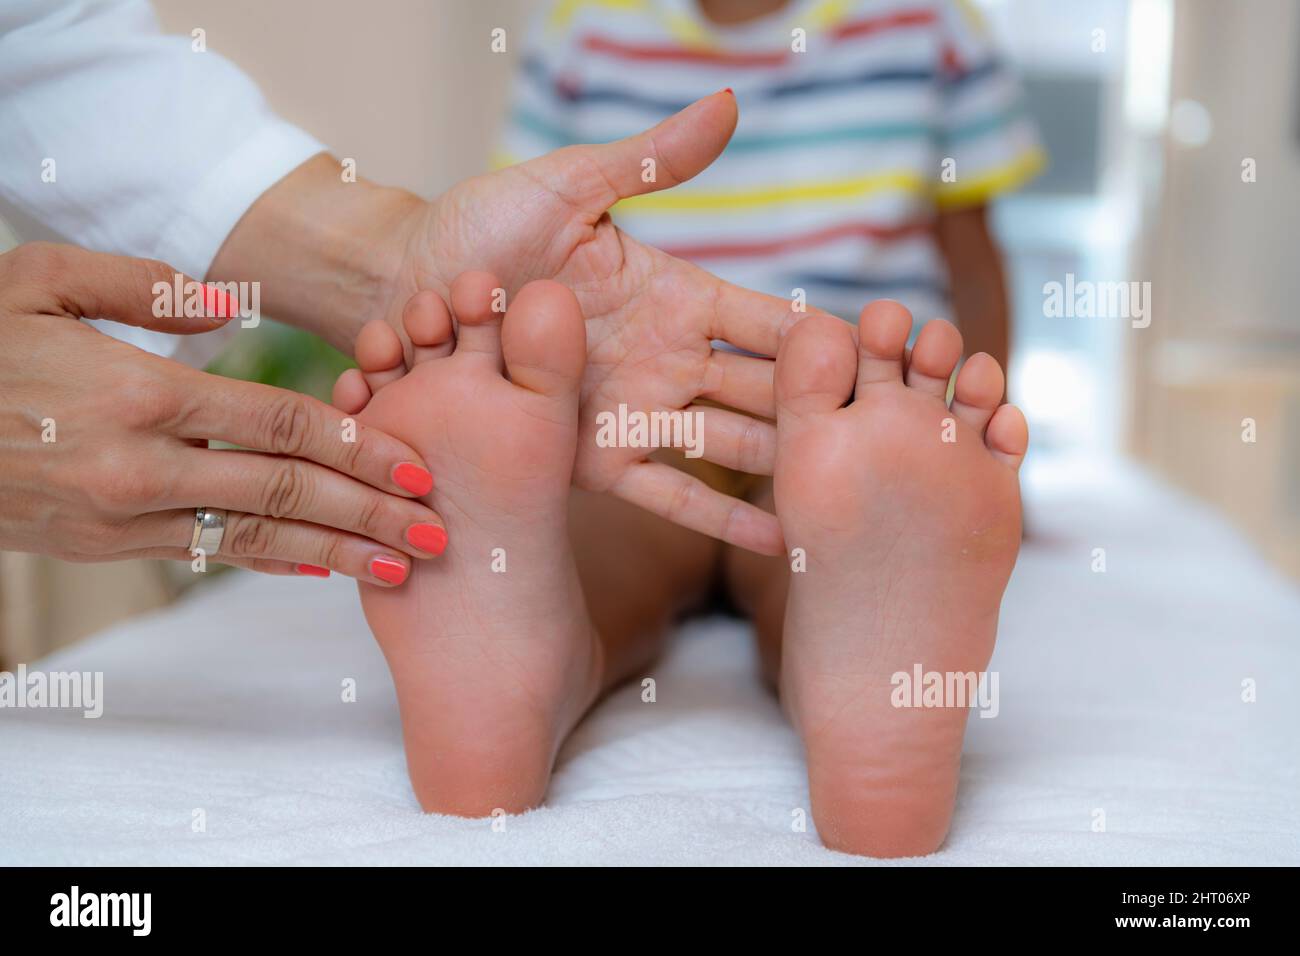 Pediatrician examining a boy's feet Stock Photo